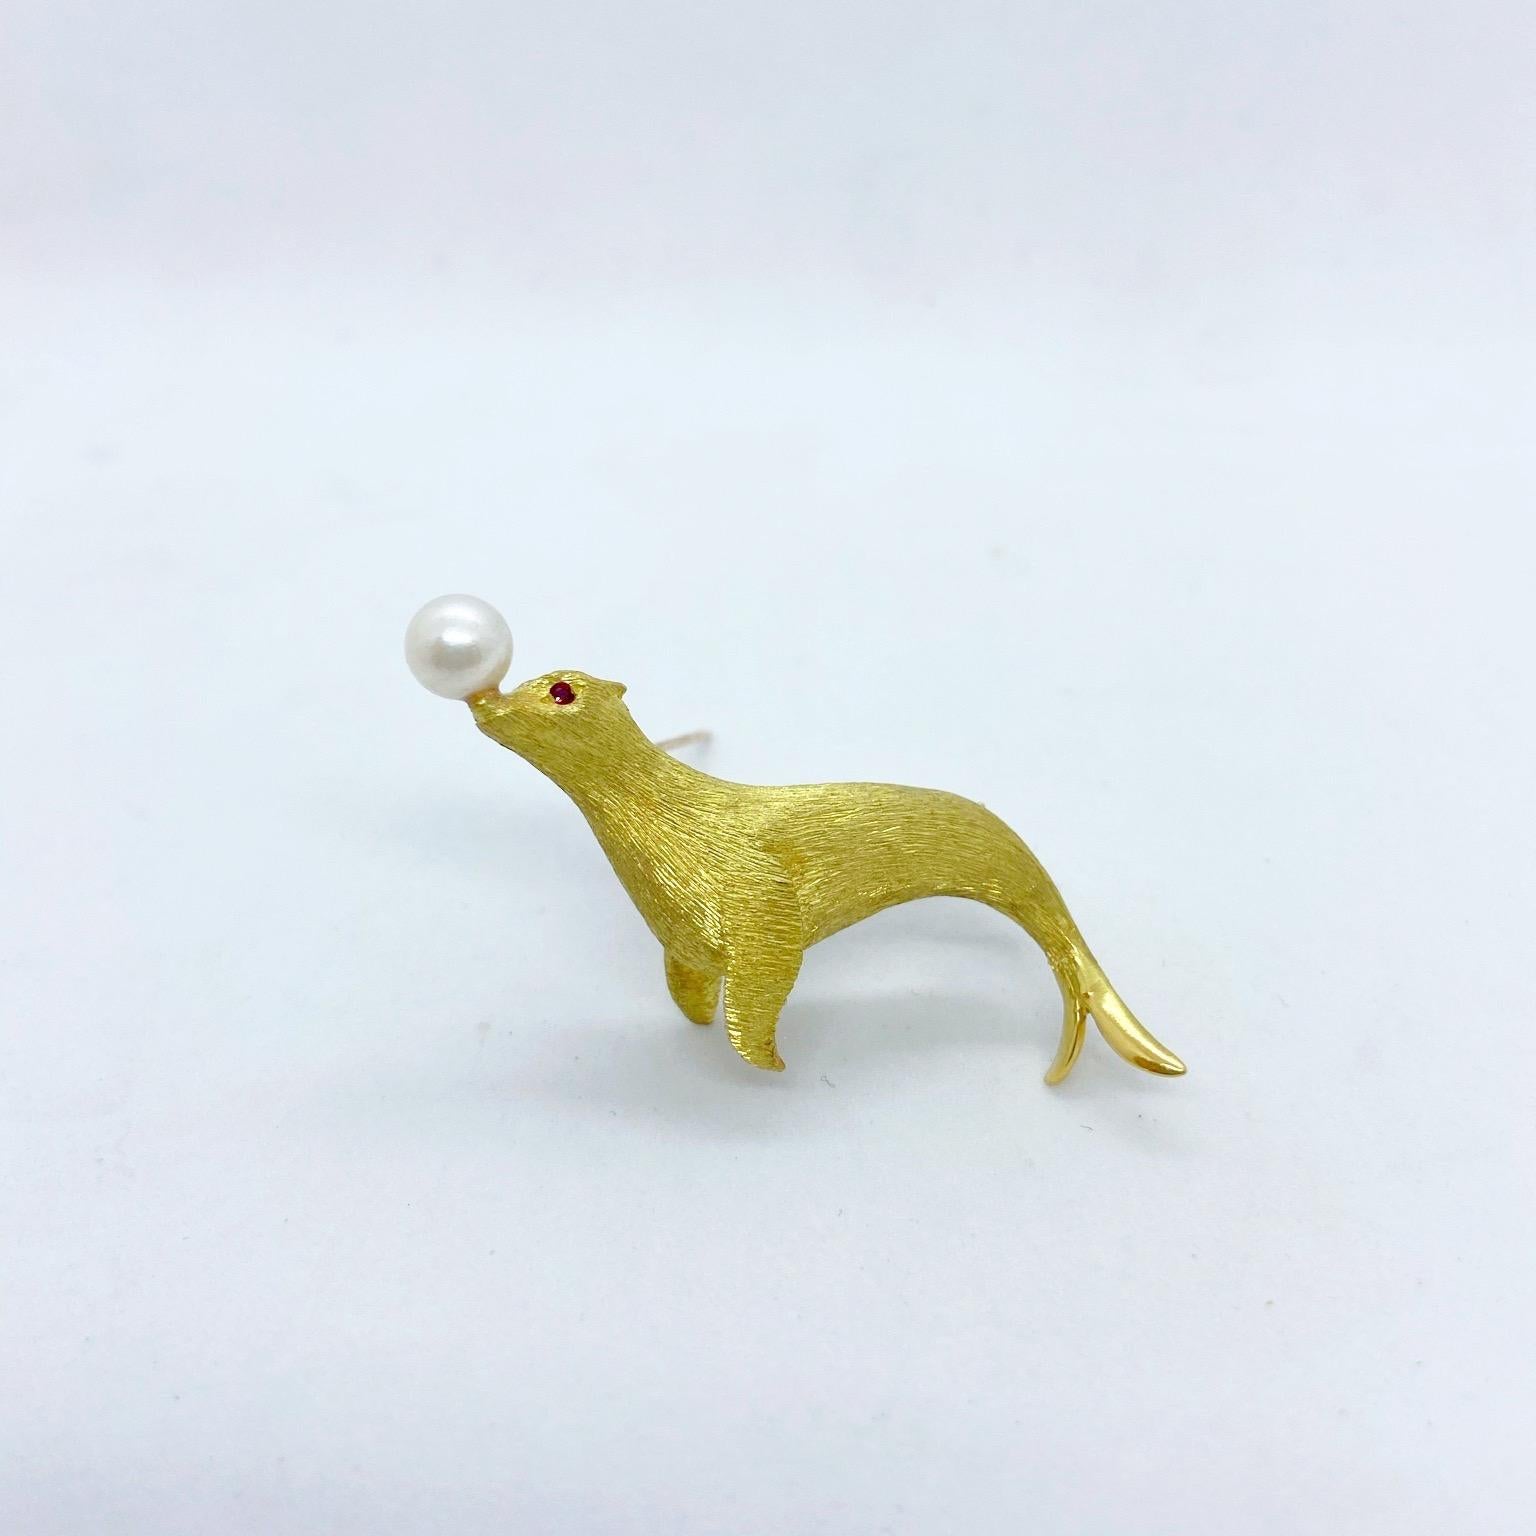 Contemporary George Lederman 18 Karat Yellow Gold Seal Balancing a Pearl on His Nose Brooch